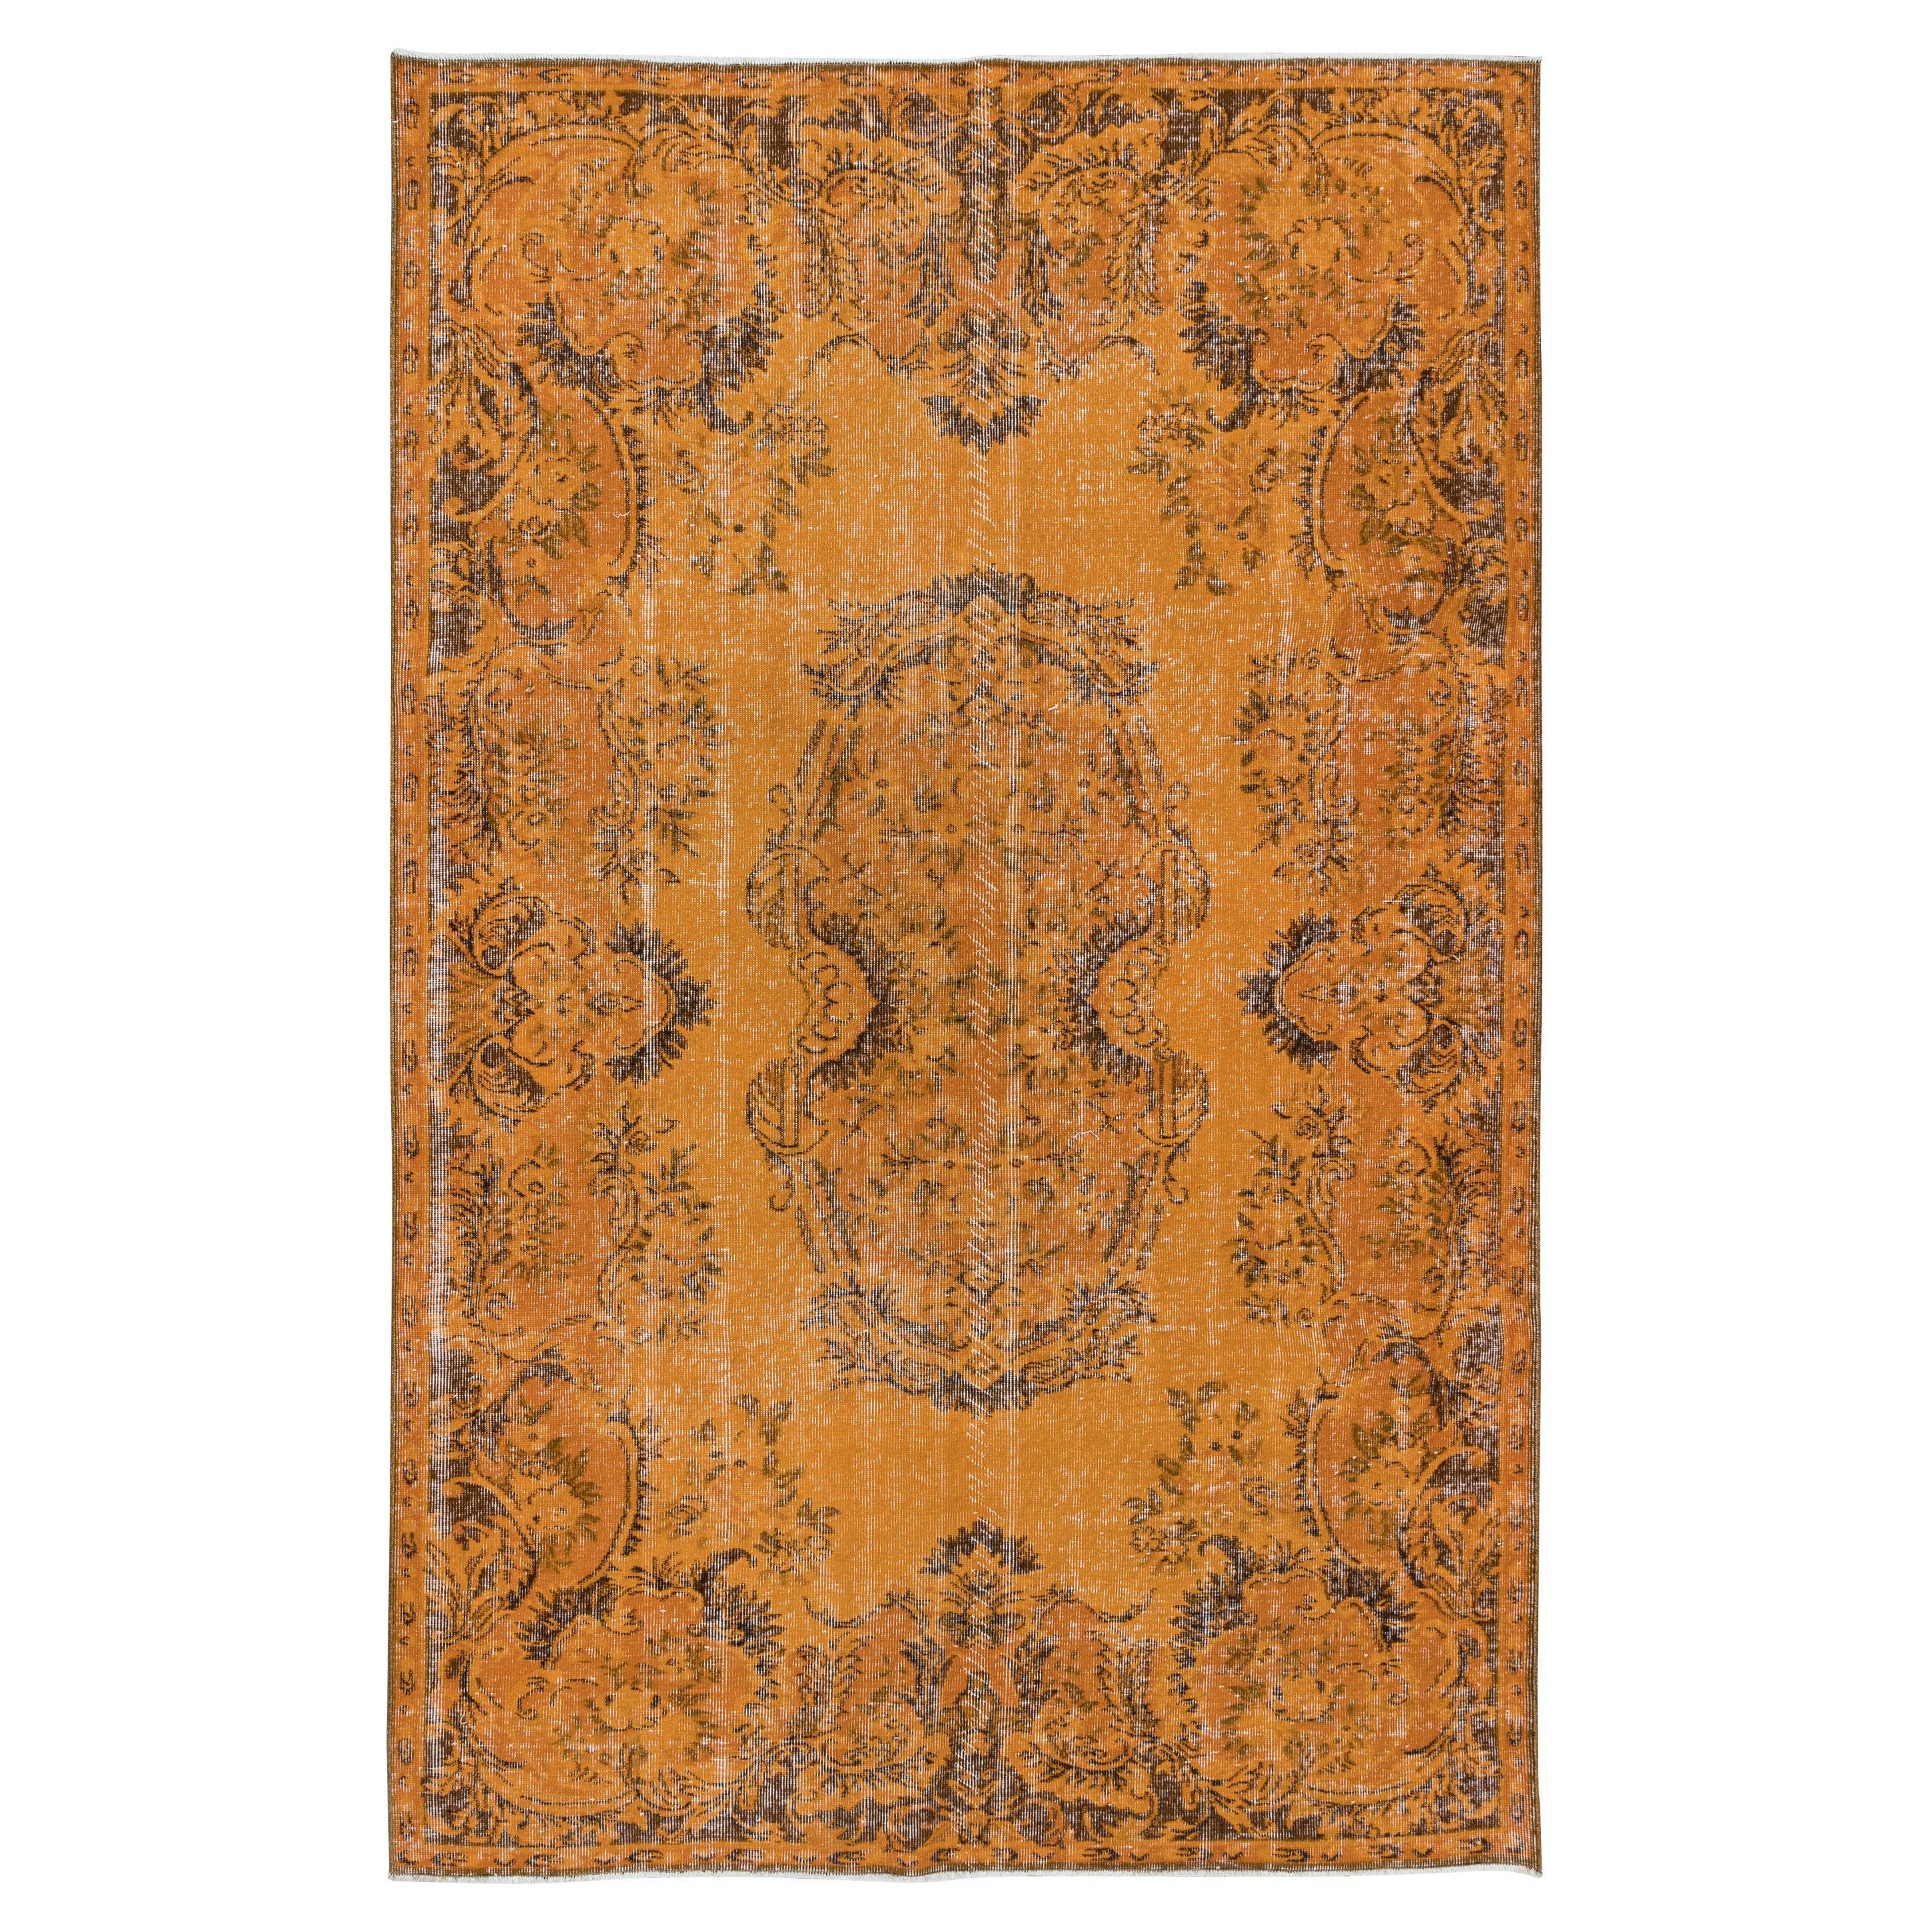 6.2x9.3 Ft French Aubusson Inspired Modern Orange Area Rug, Handmade in Turkey (tapis d'inspiration Aubusson)